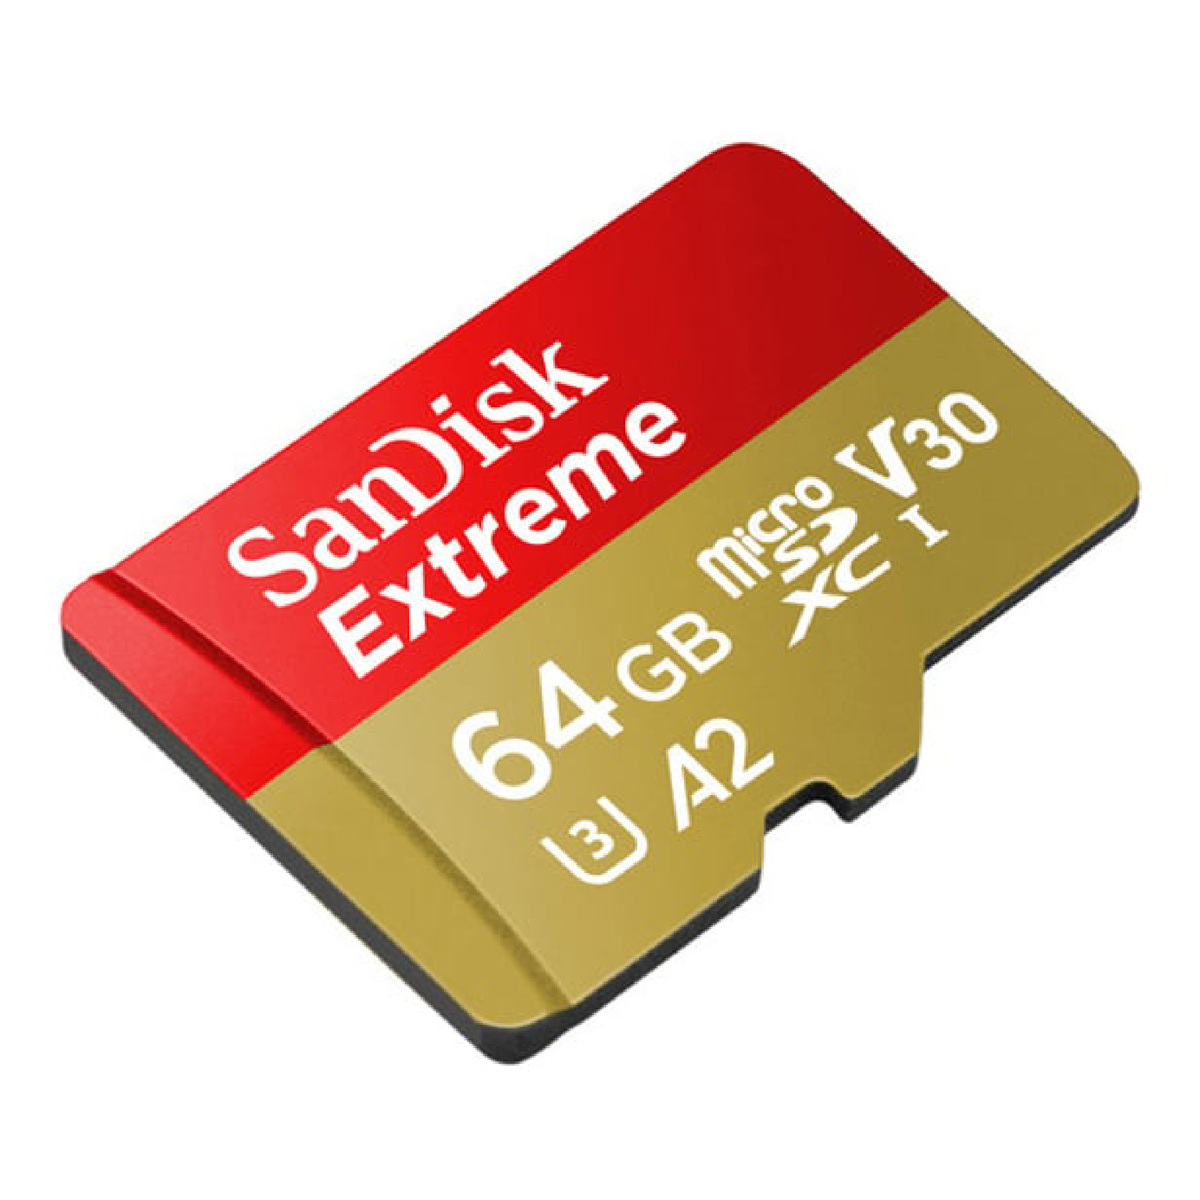 SanDisk Extreme microSDXC Mobile , SQXAH 64GB